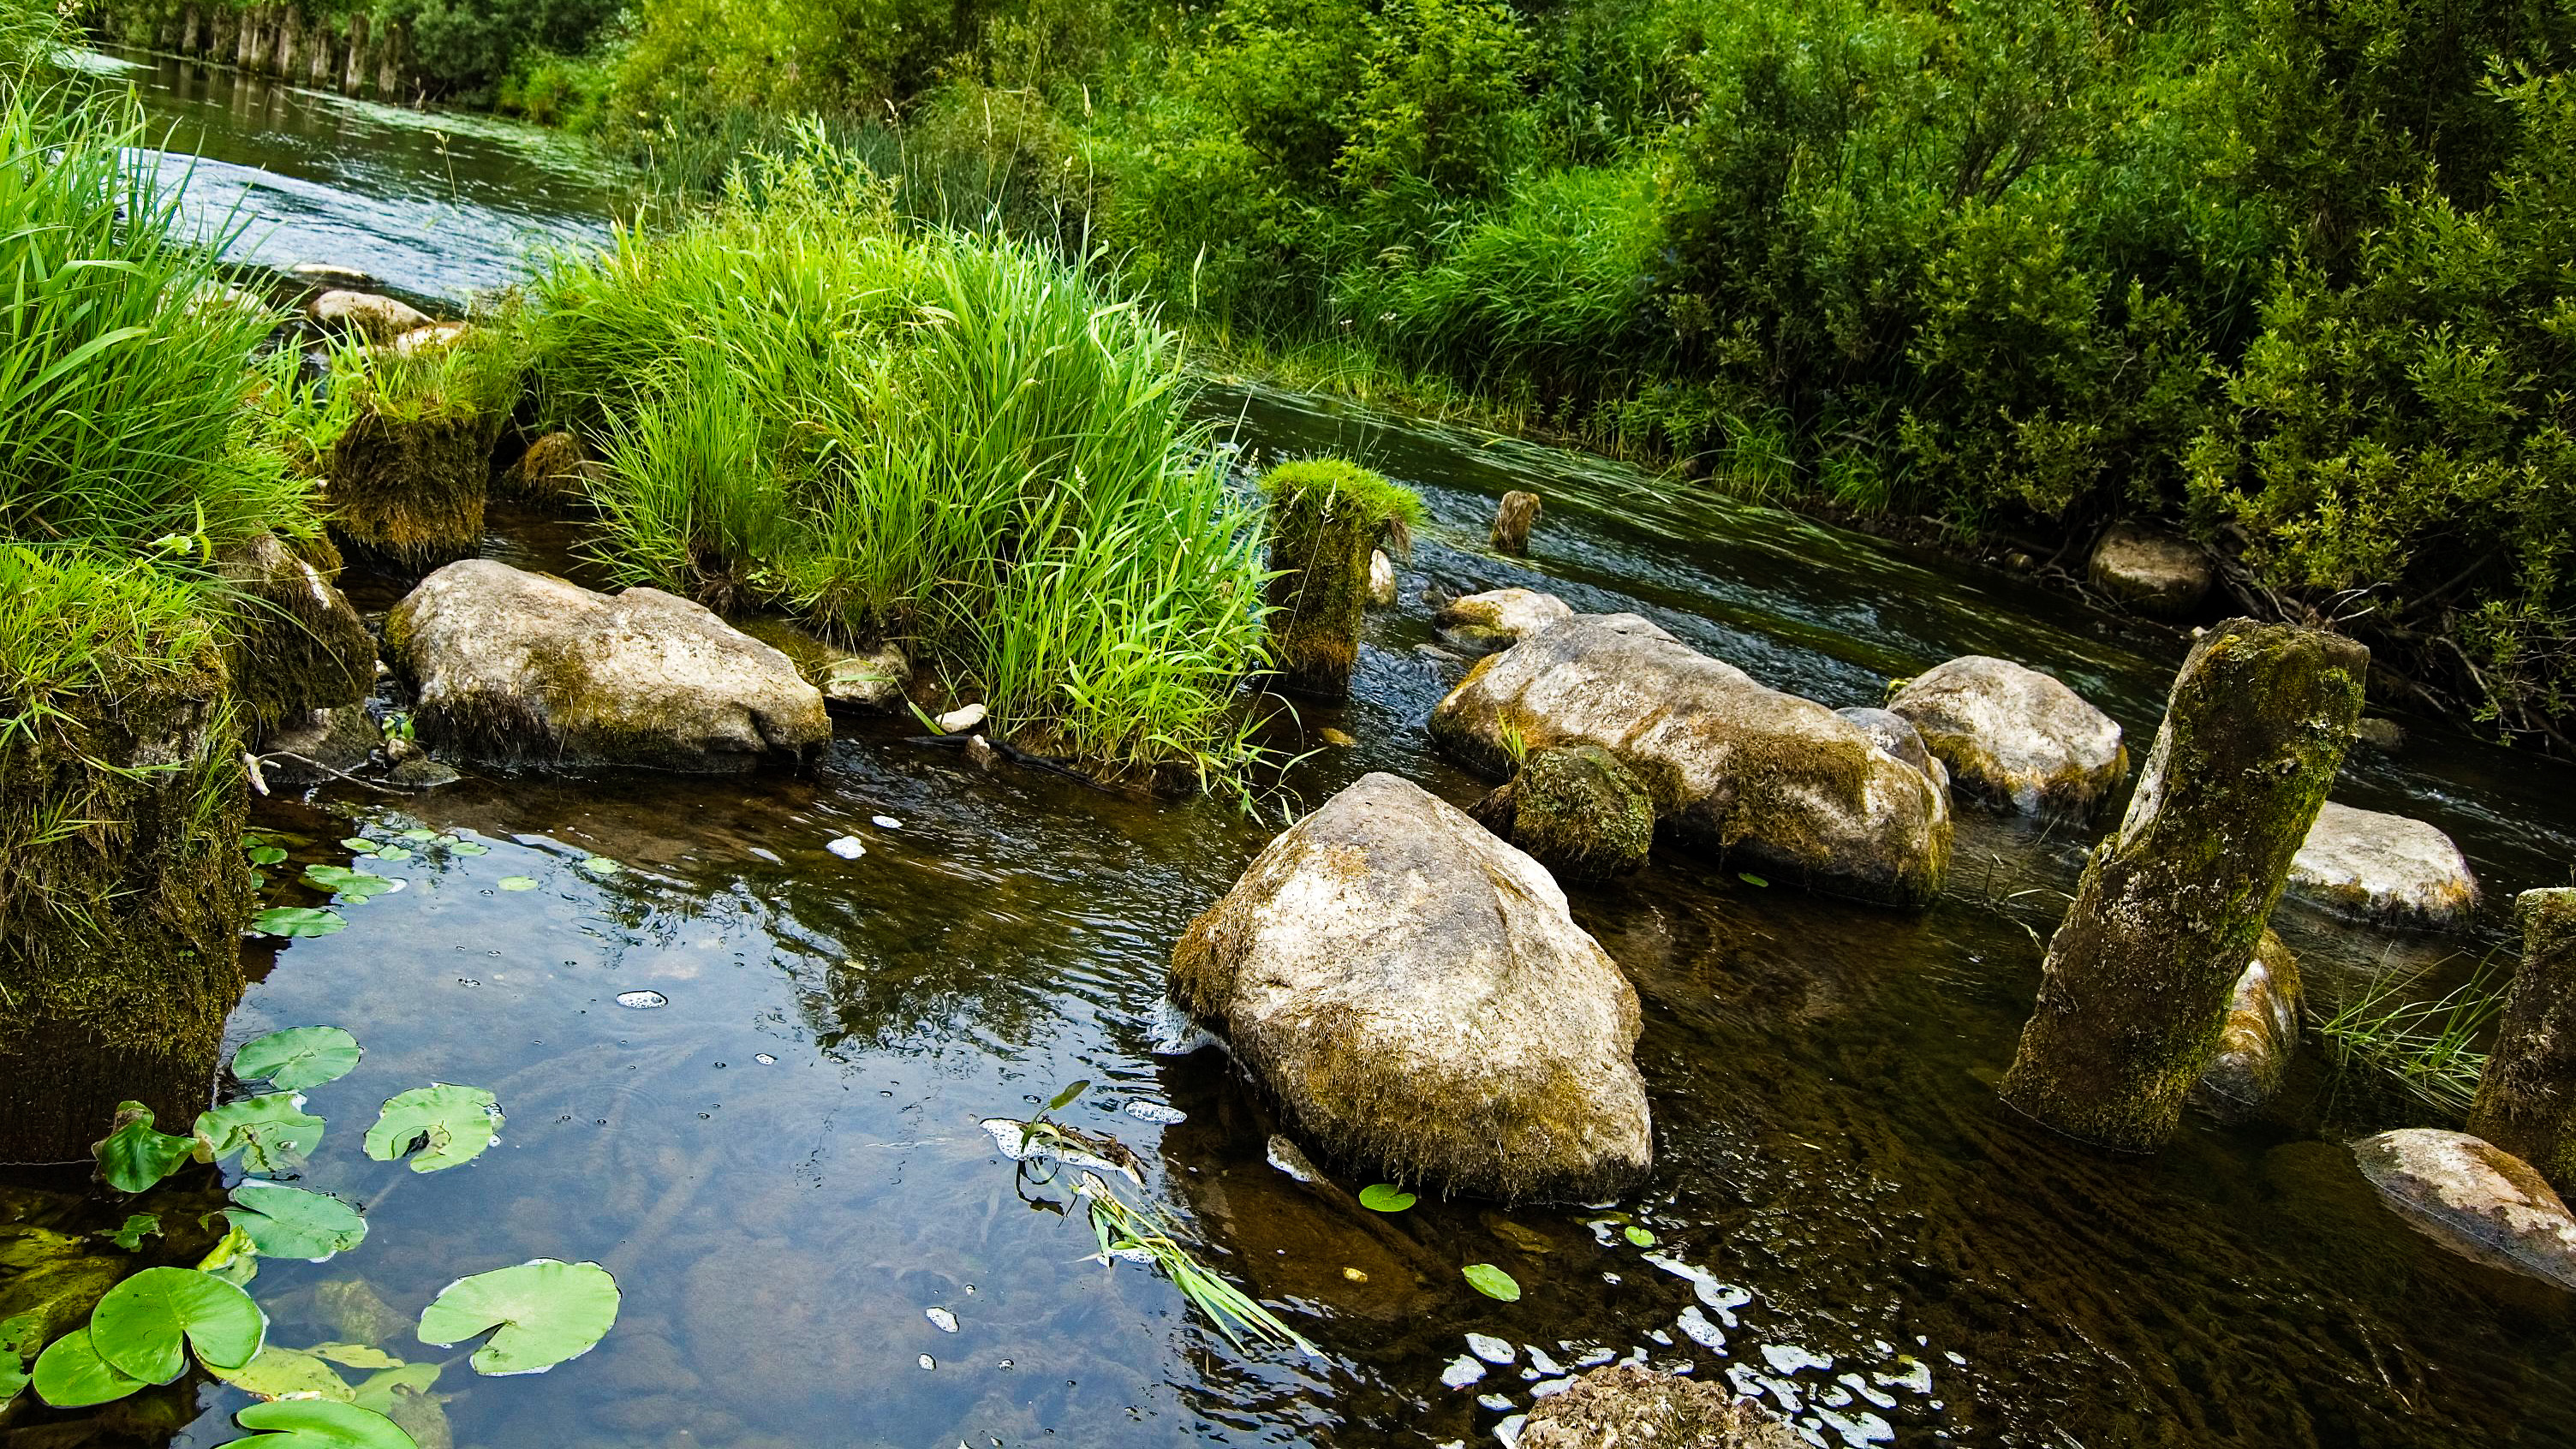 Stone river. Речка Каширка камни. Ручей с камнями. Камни в реке. Валуны у реки.